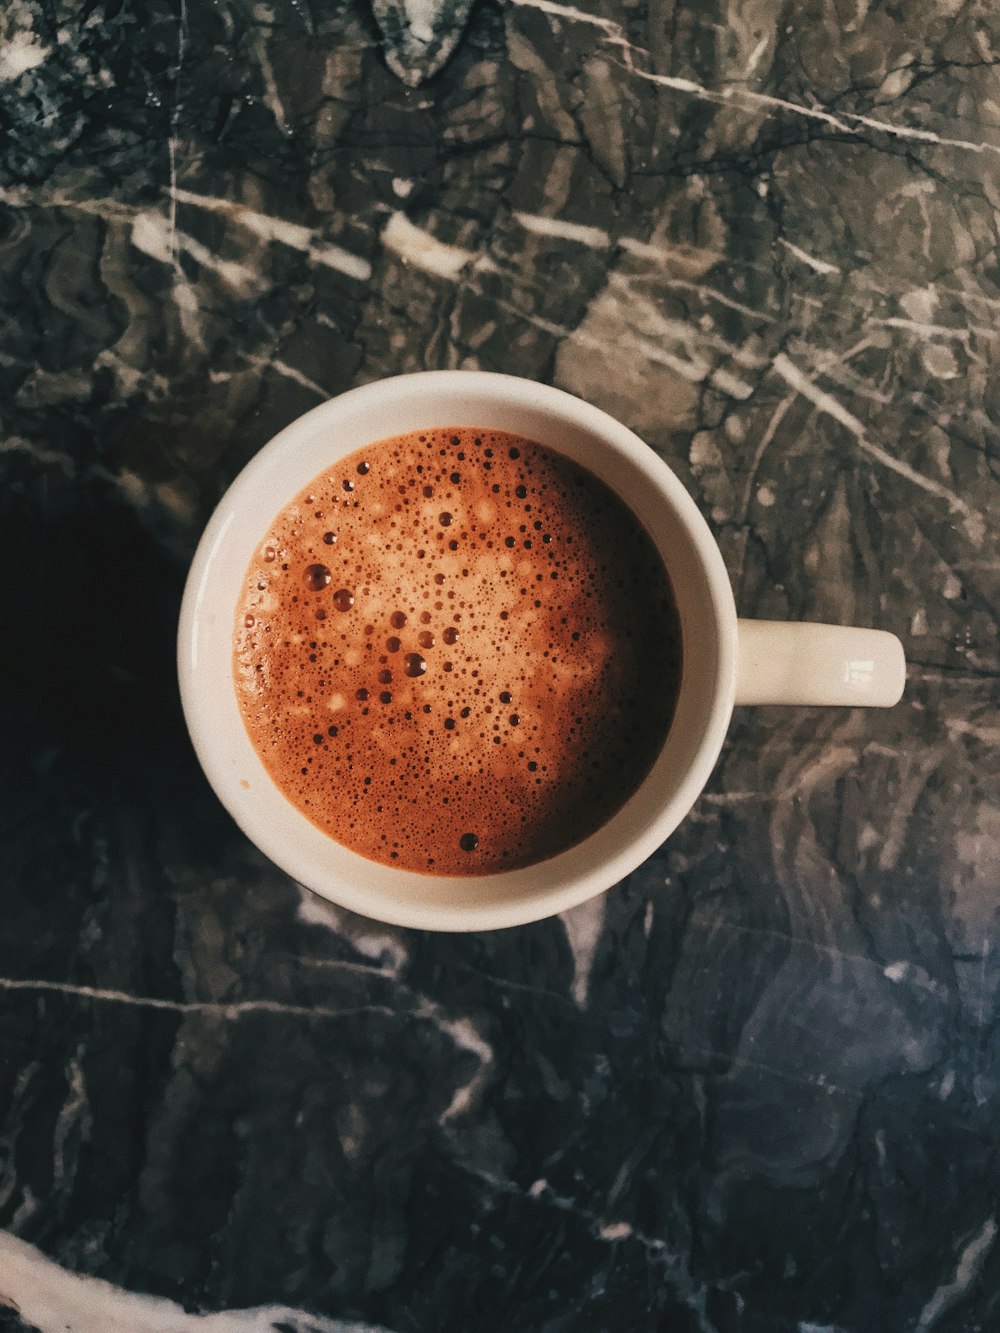 brown liquid in white ceramic cup